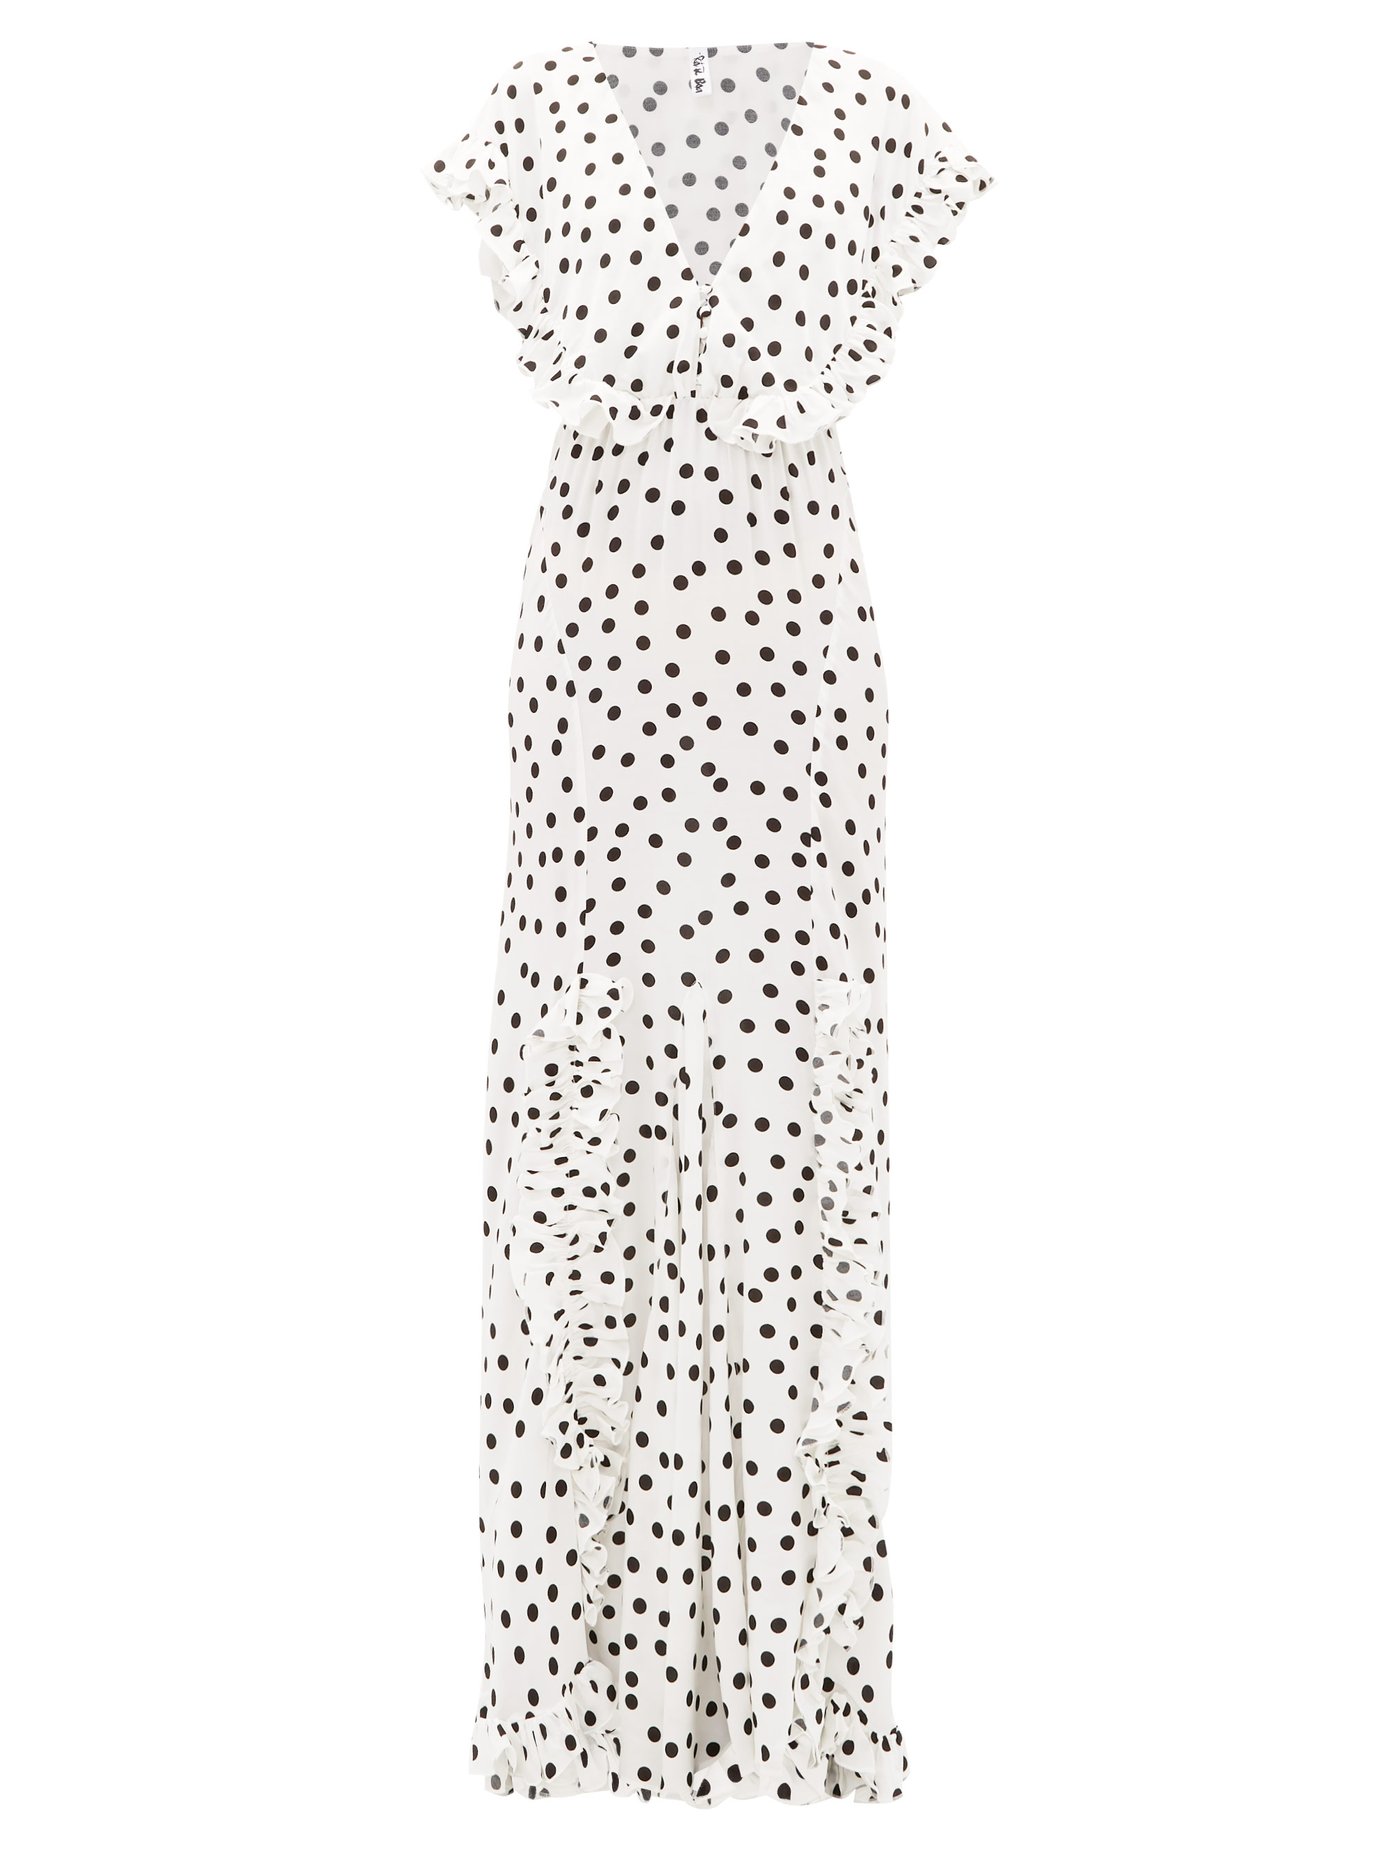 maxi dress with polka dots